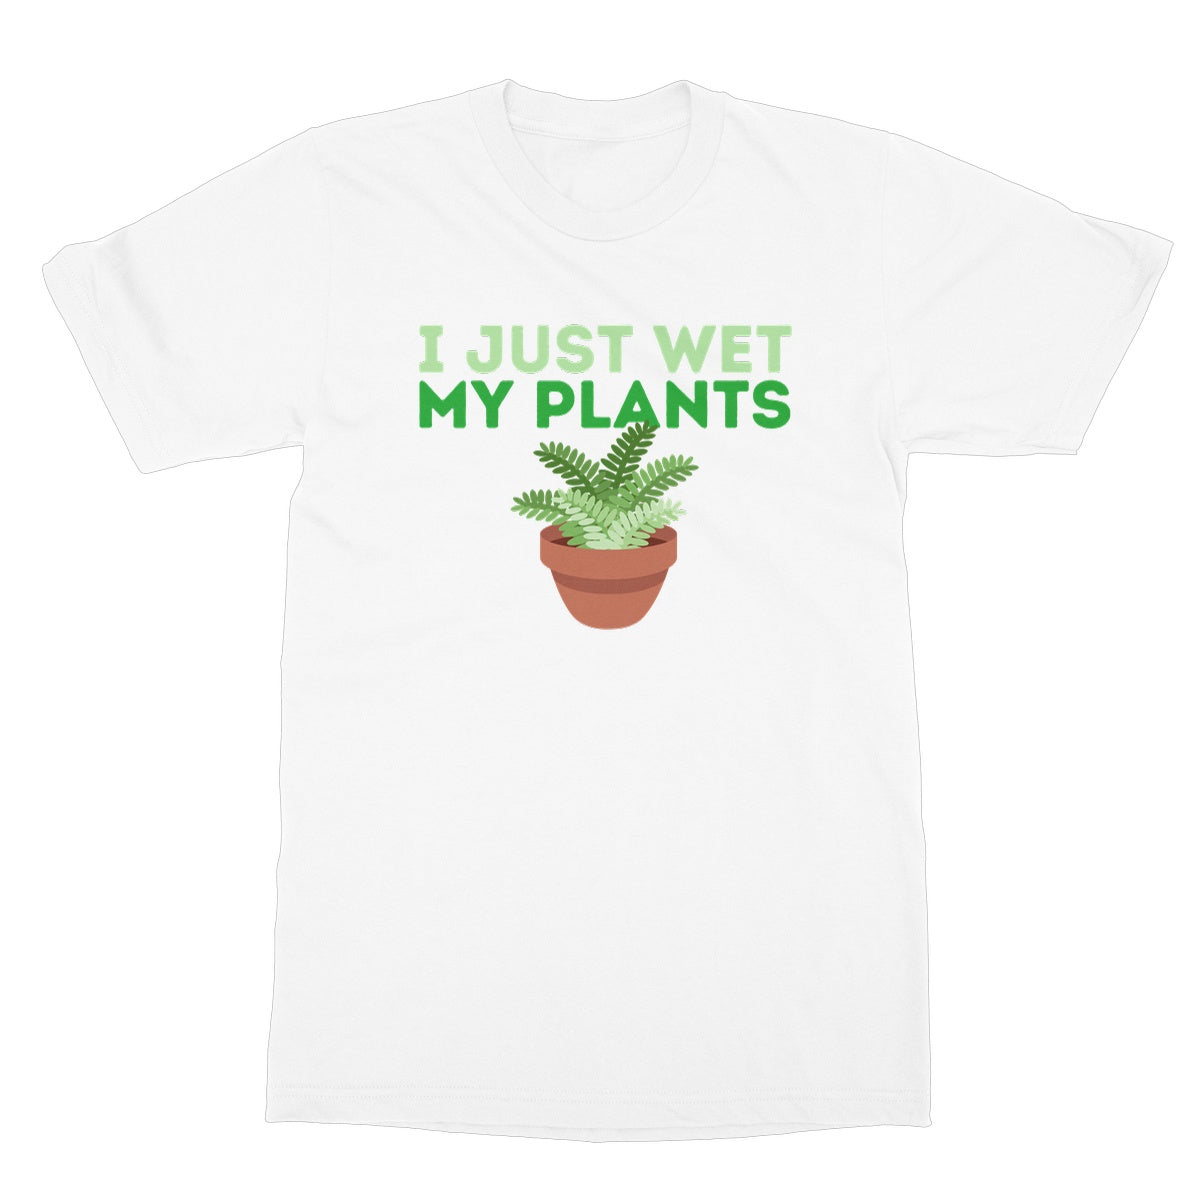 I just wet my plants t shirt white